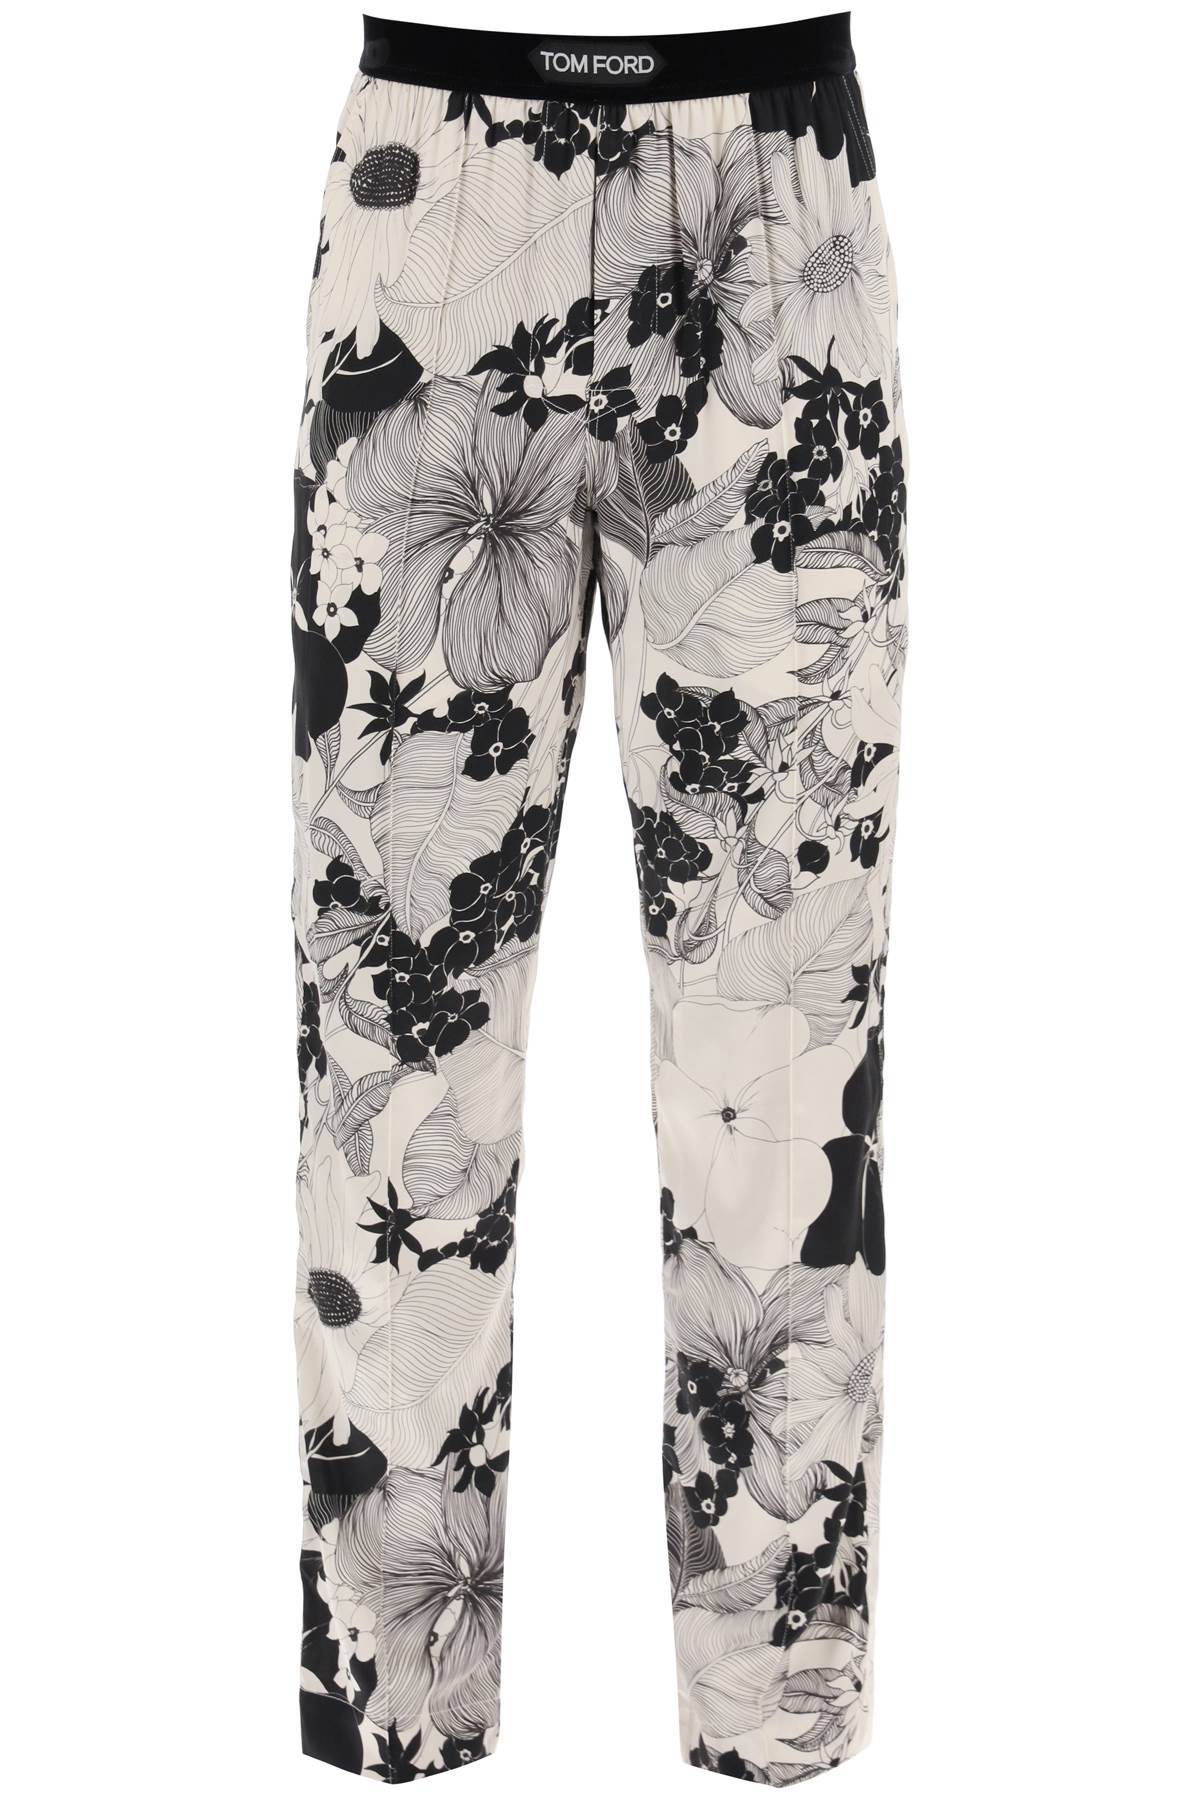 TOM FORD pajama pants in floral silk